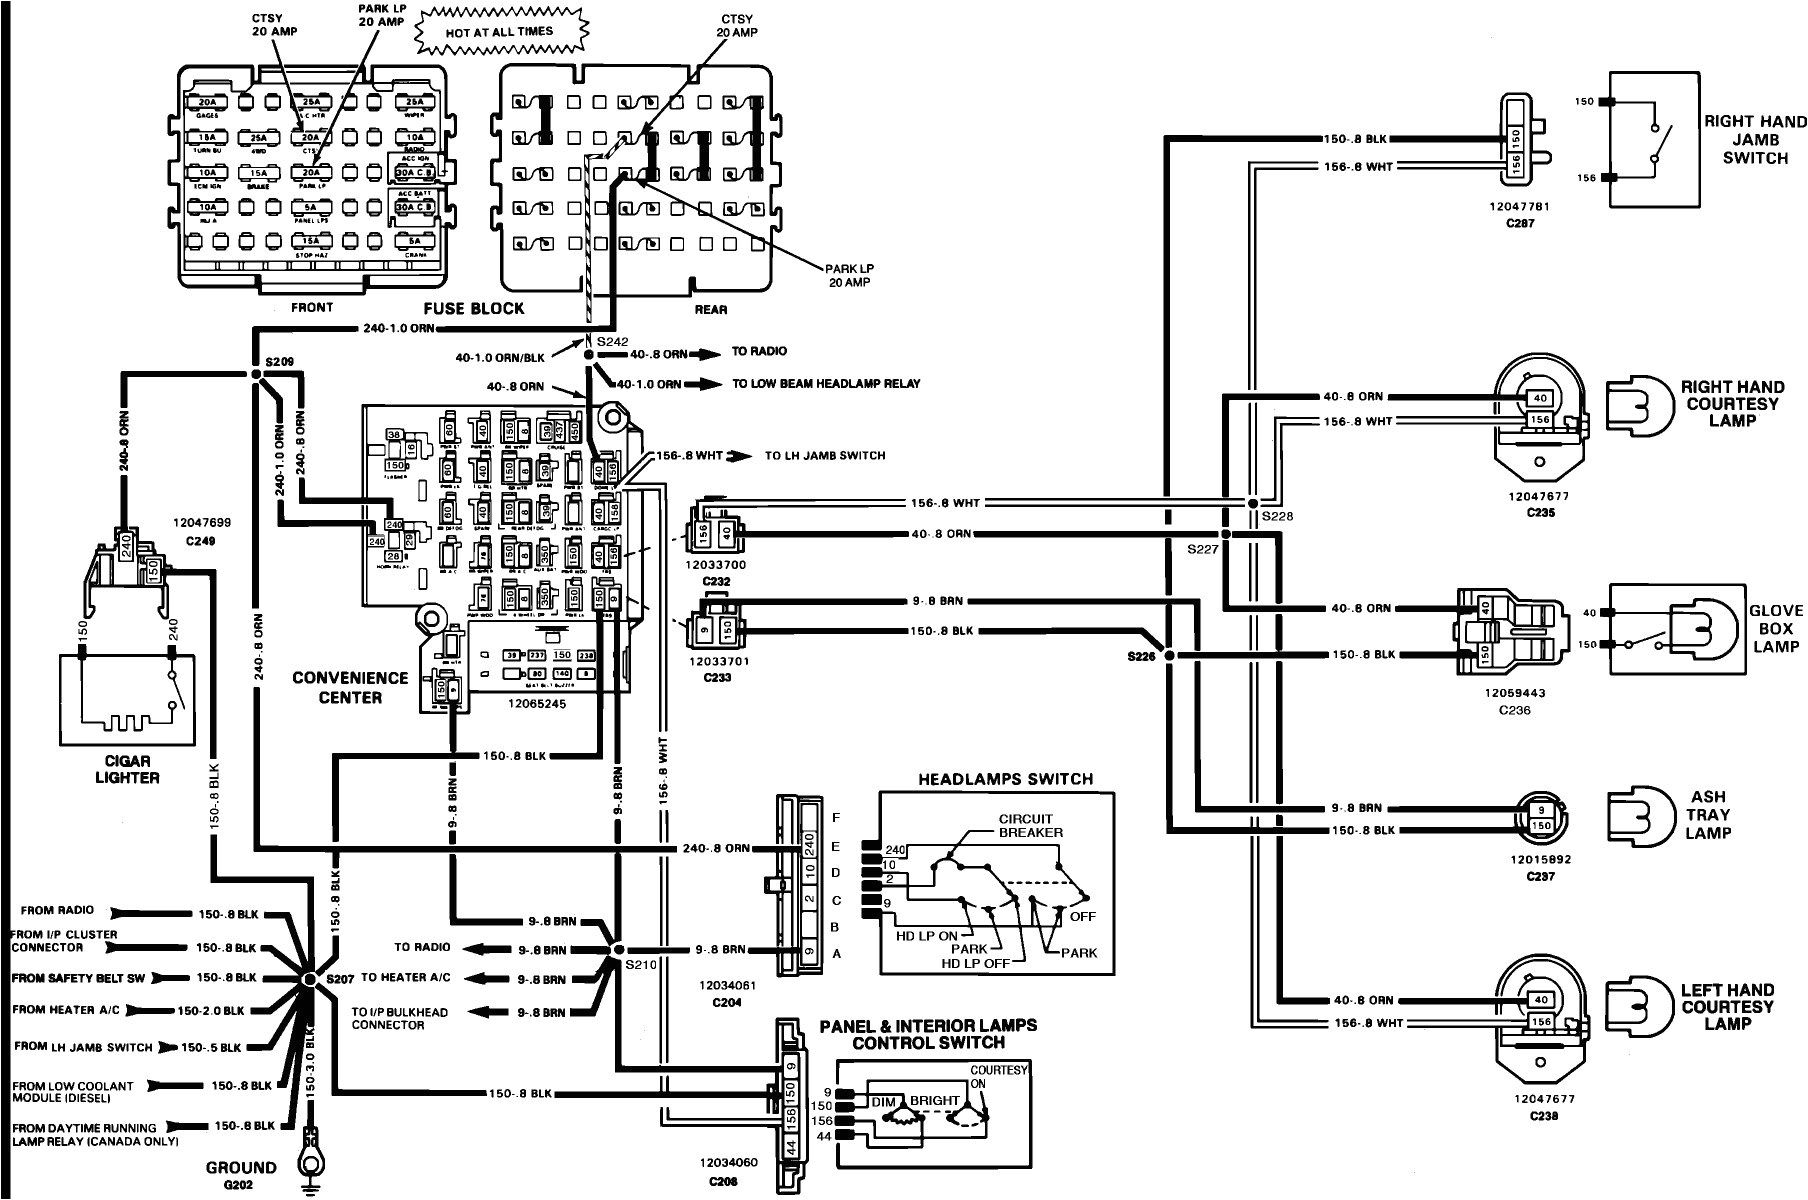 switch chevy diagram wiring headlight gm 726 wiring diagram db 1993 gm headlight switch wiring wiring